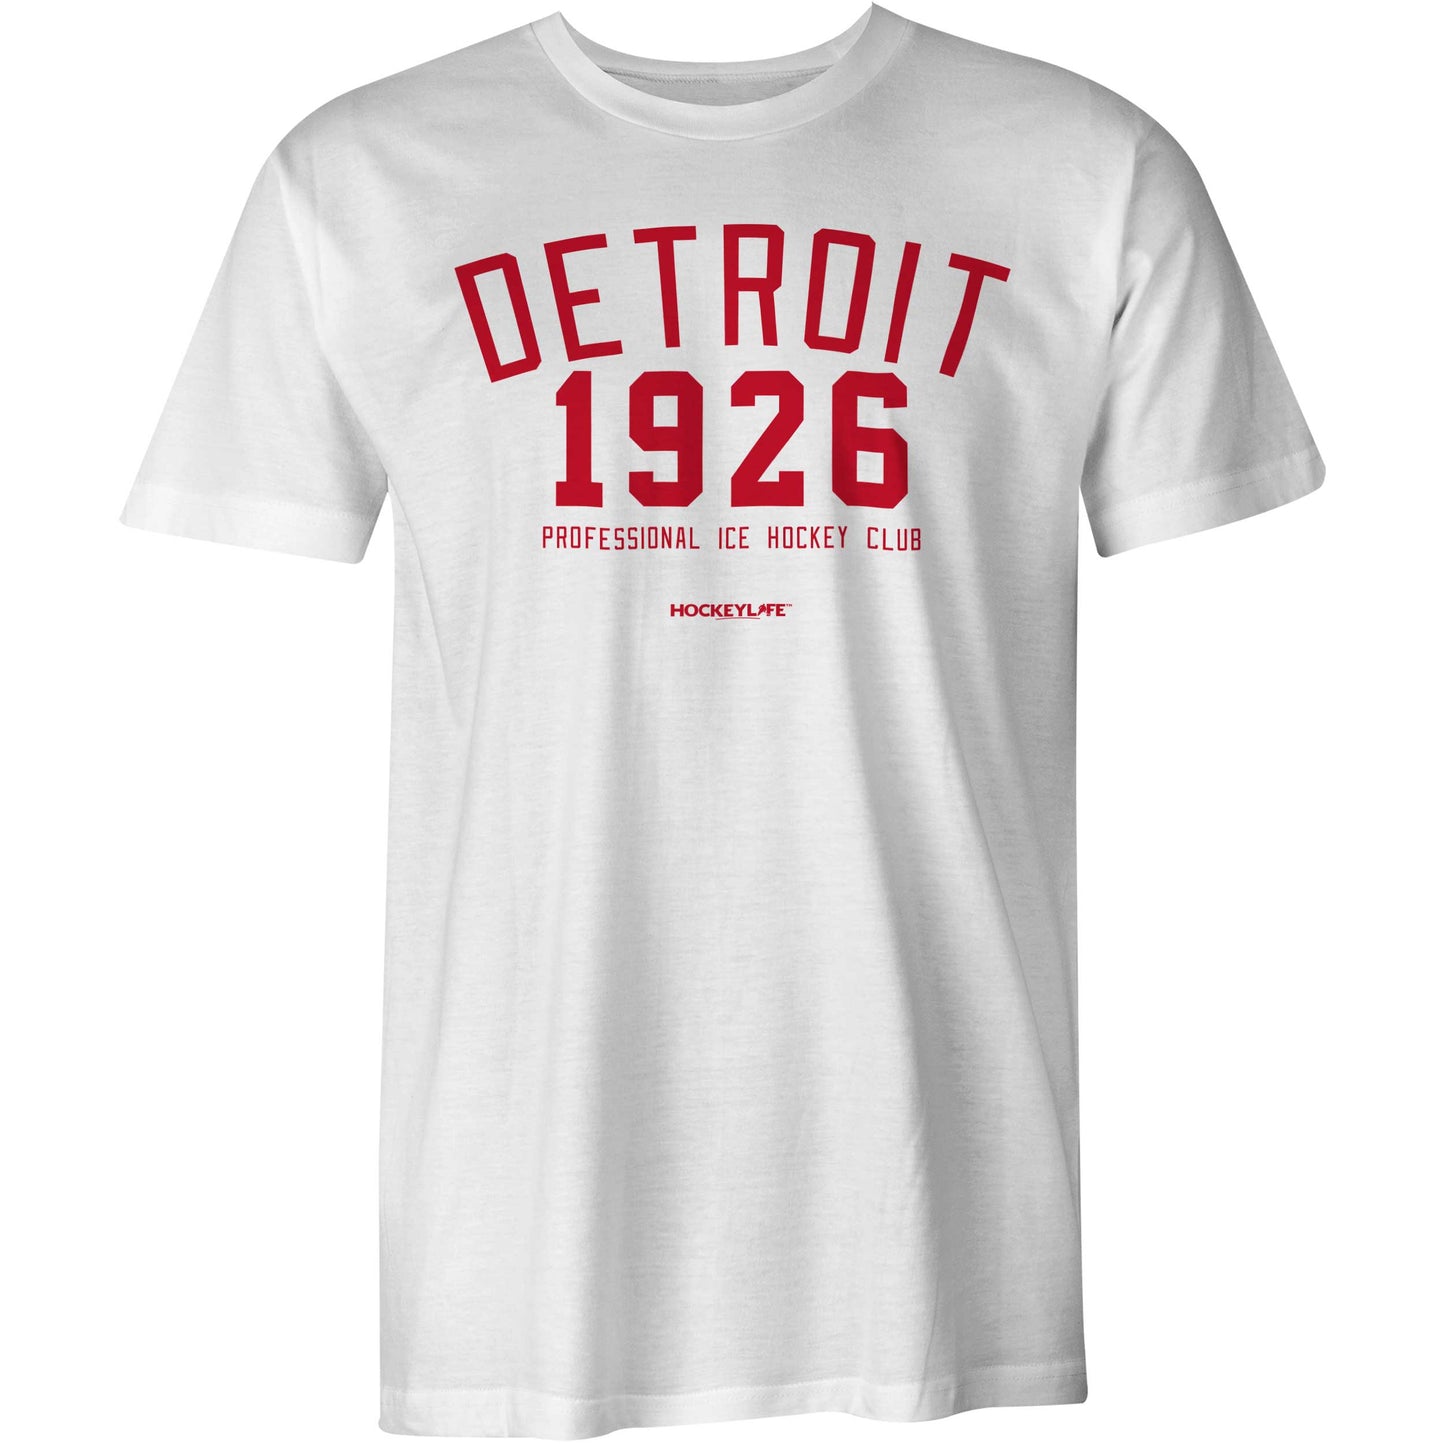 Detroit Professional Hockey Club Tee Shirt (White)